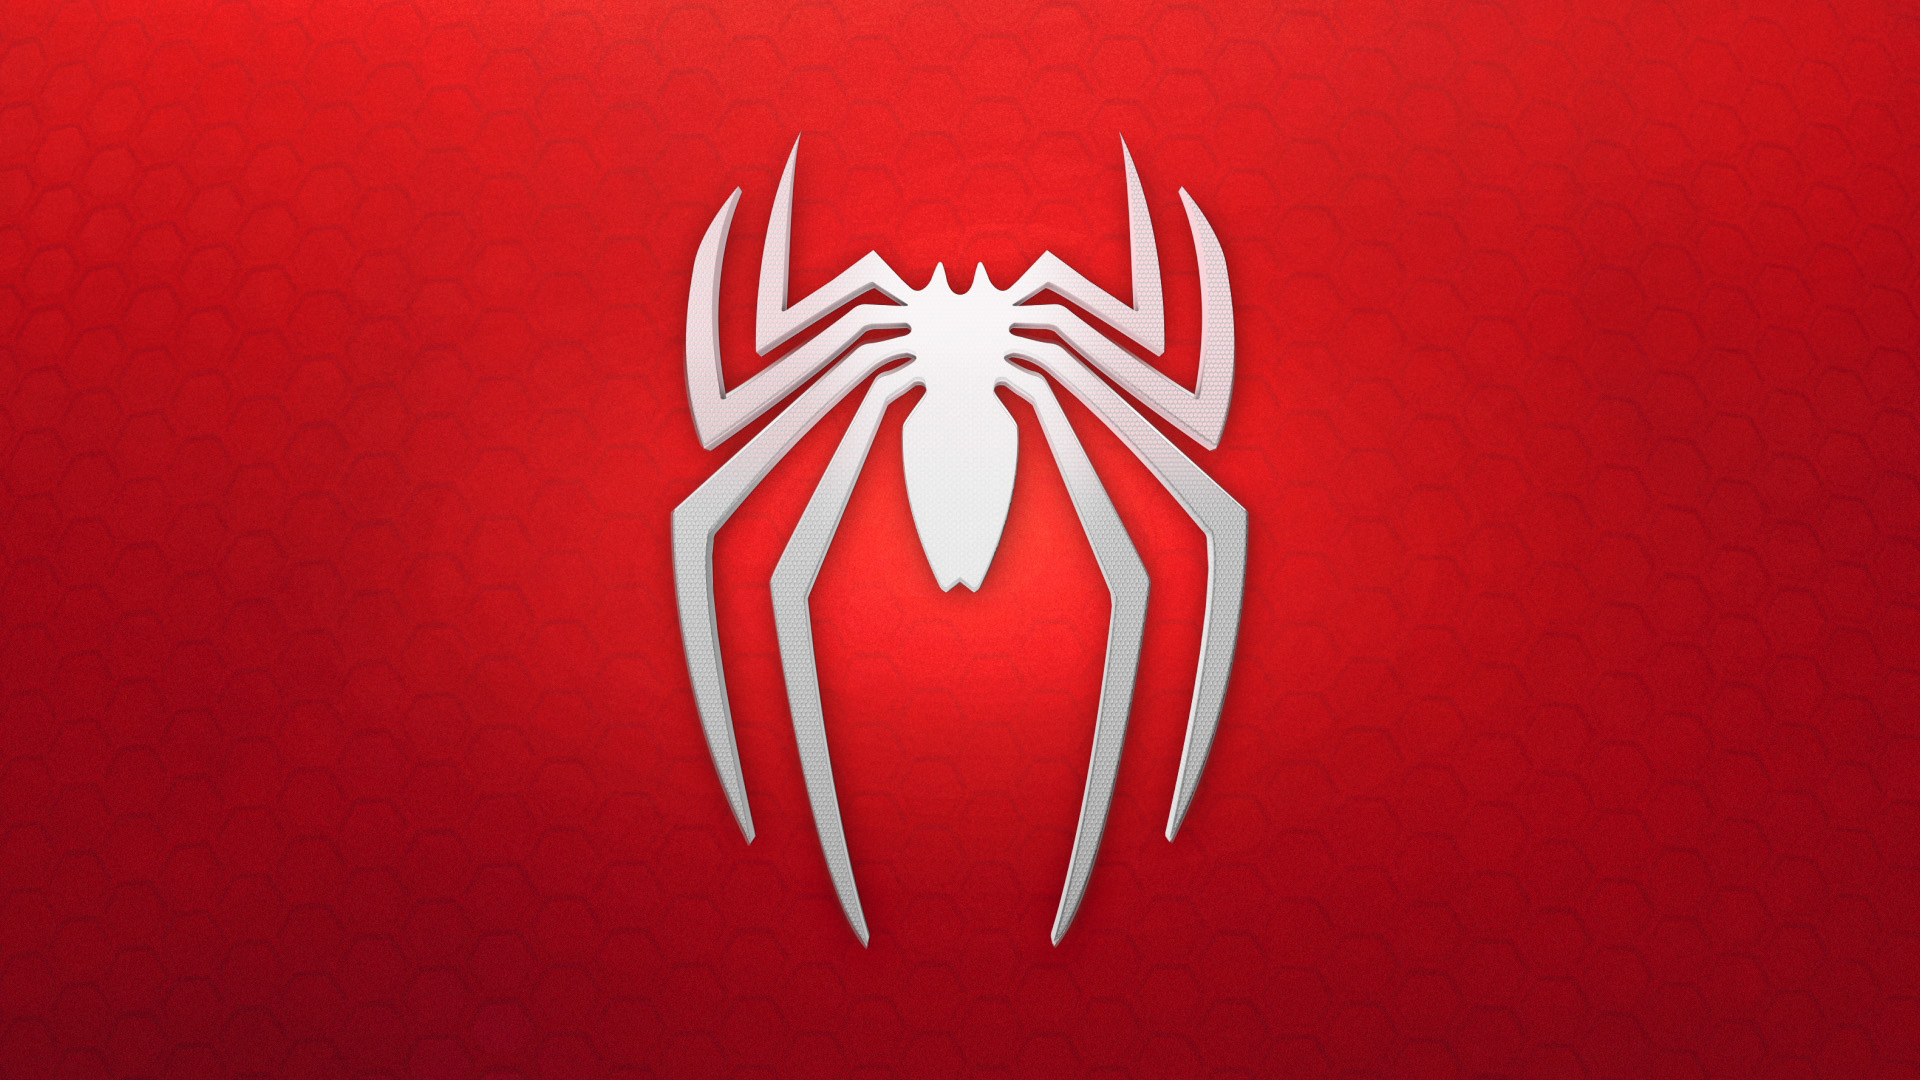 Spiderman HD wallpapers, Desktop wallpaper - most viewed